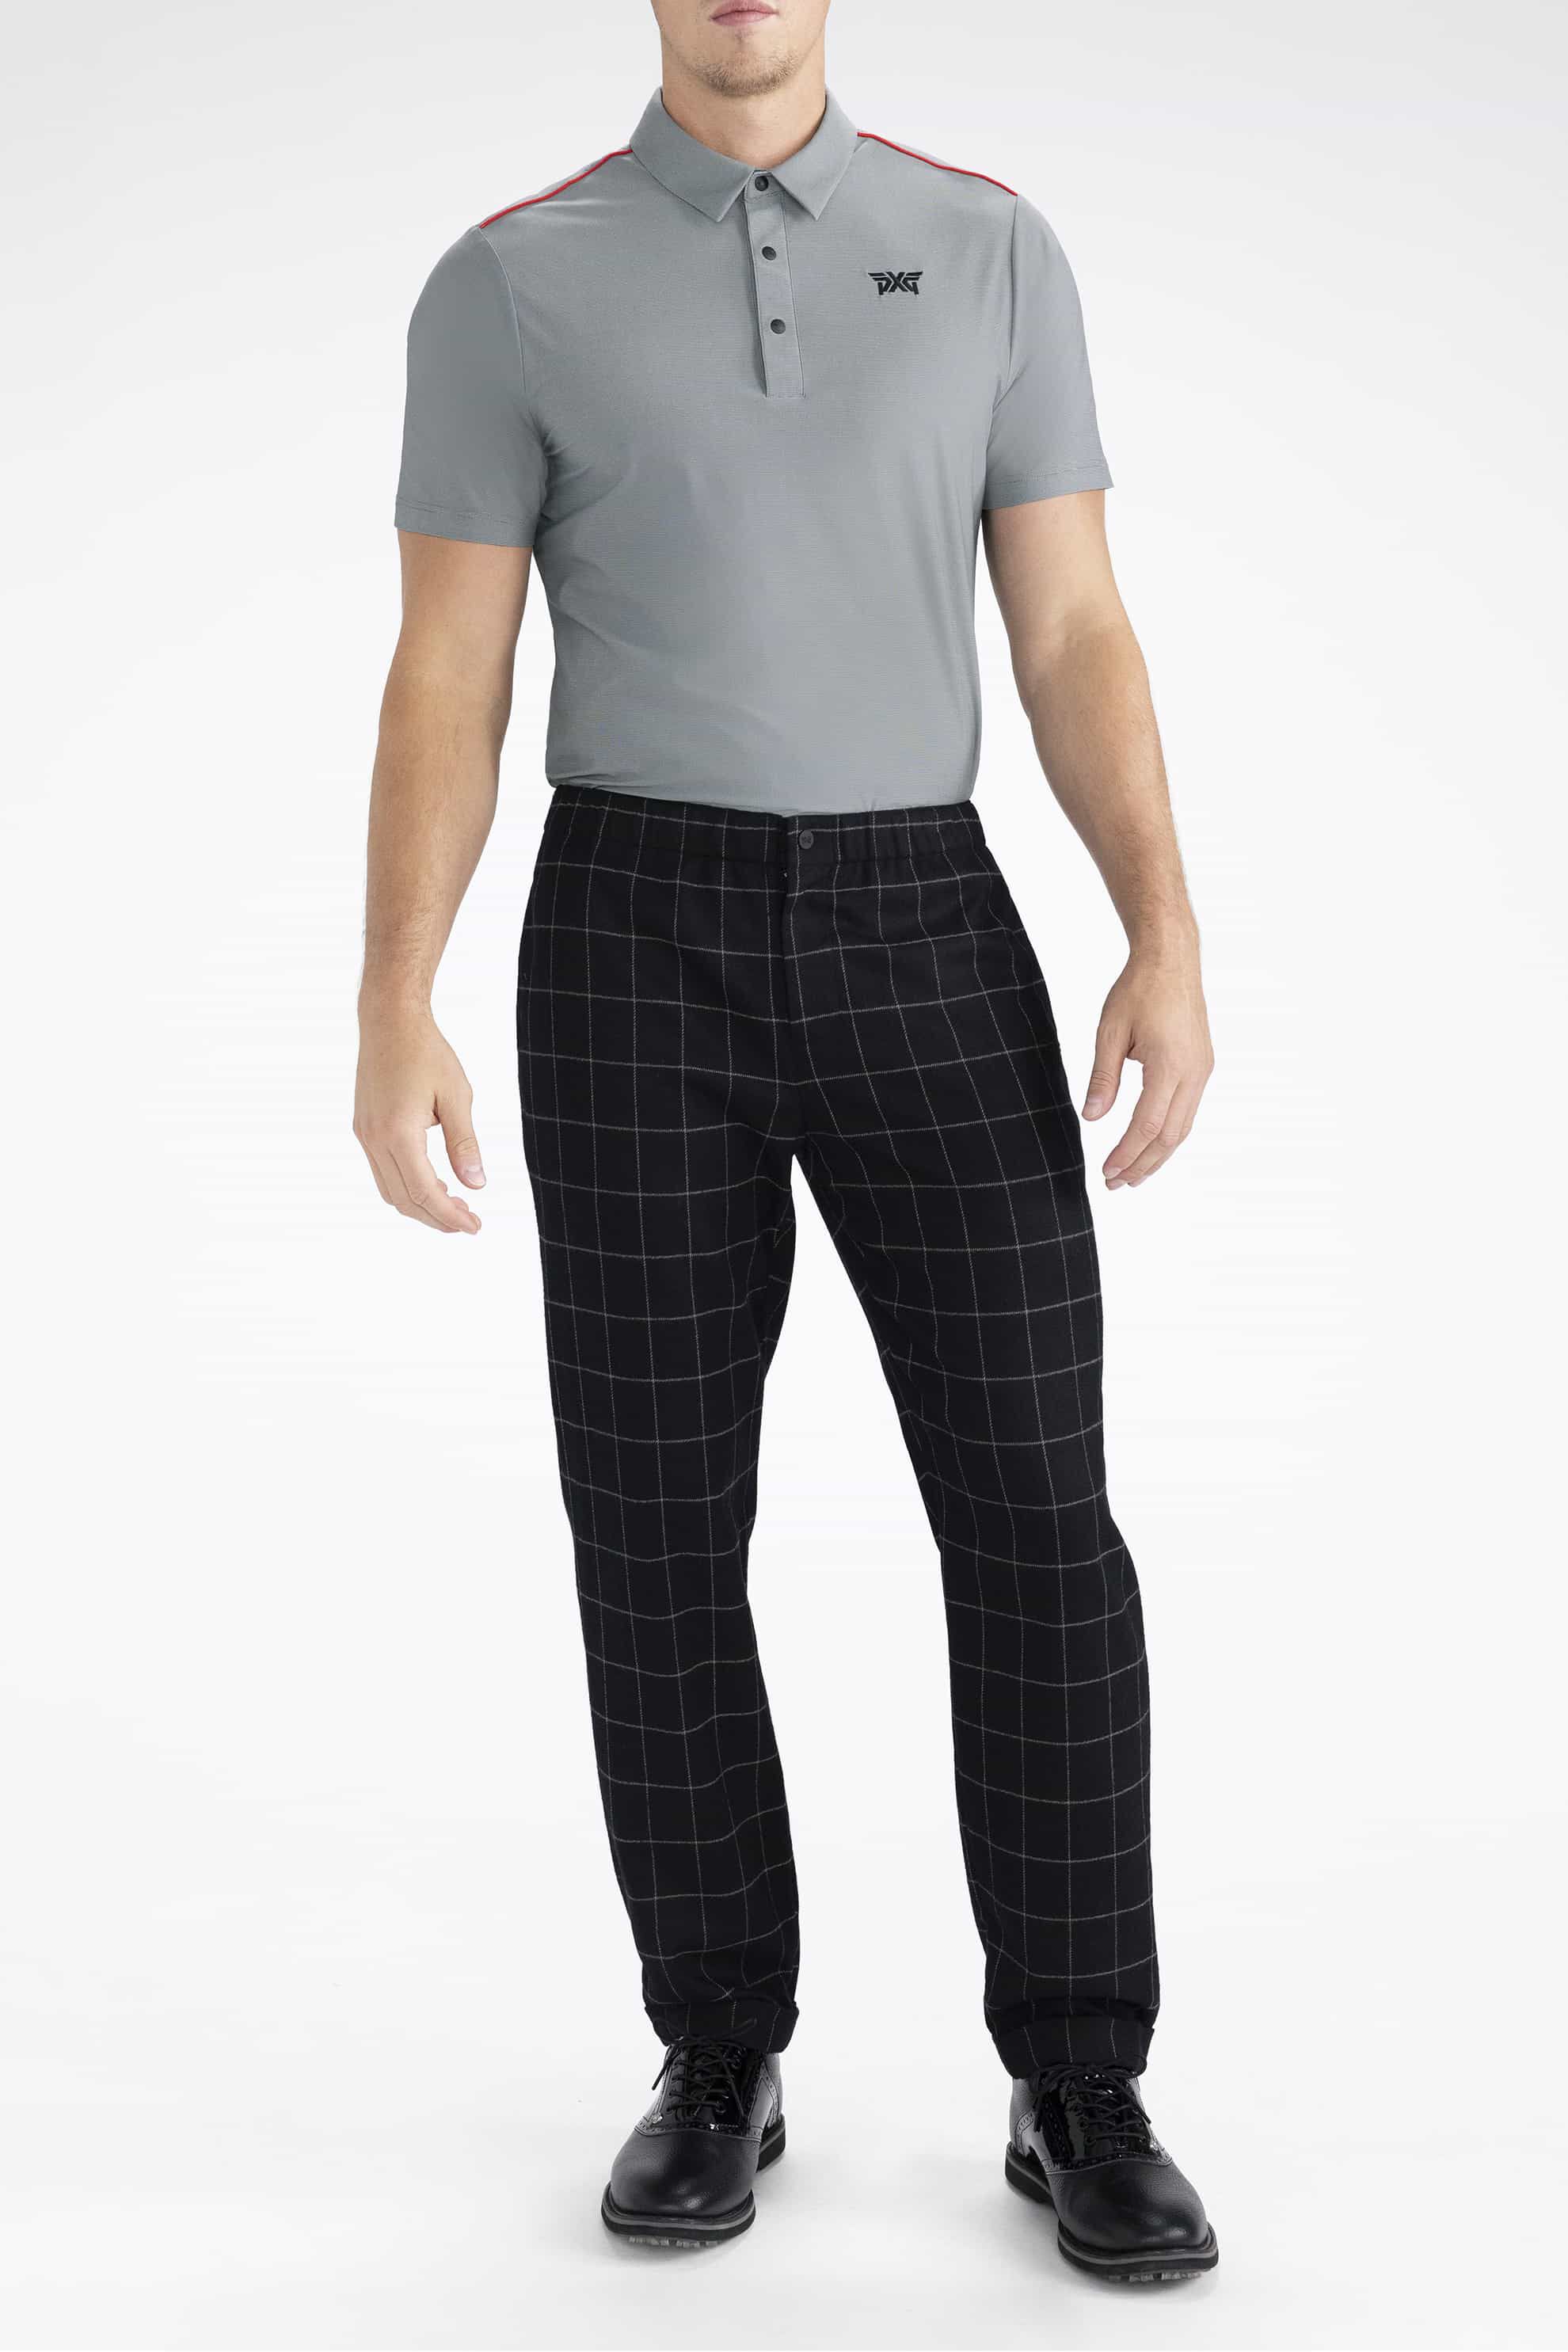 Buy Black Trousers  Pants for Men by DENNISLINGO PREMIUM ATTIRE Online   Ajiocom